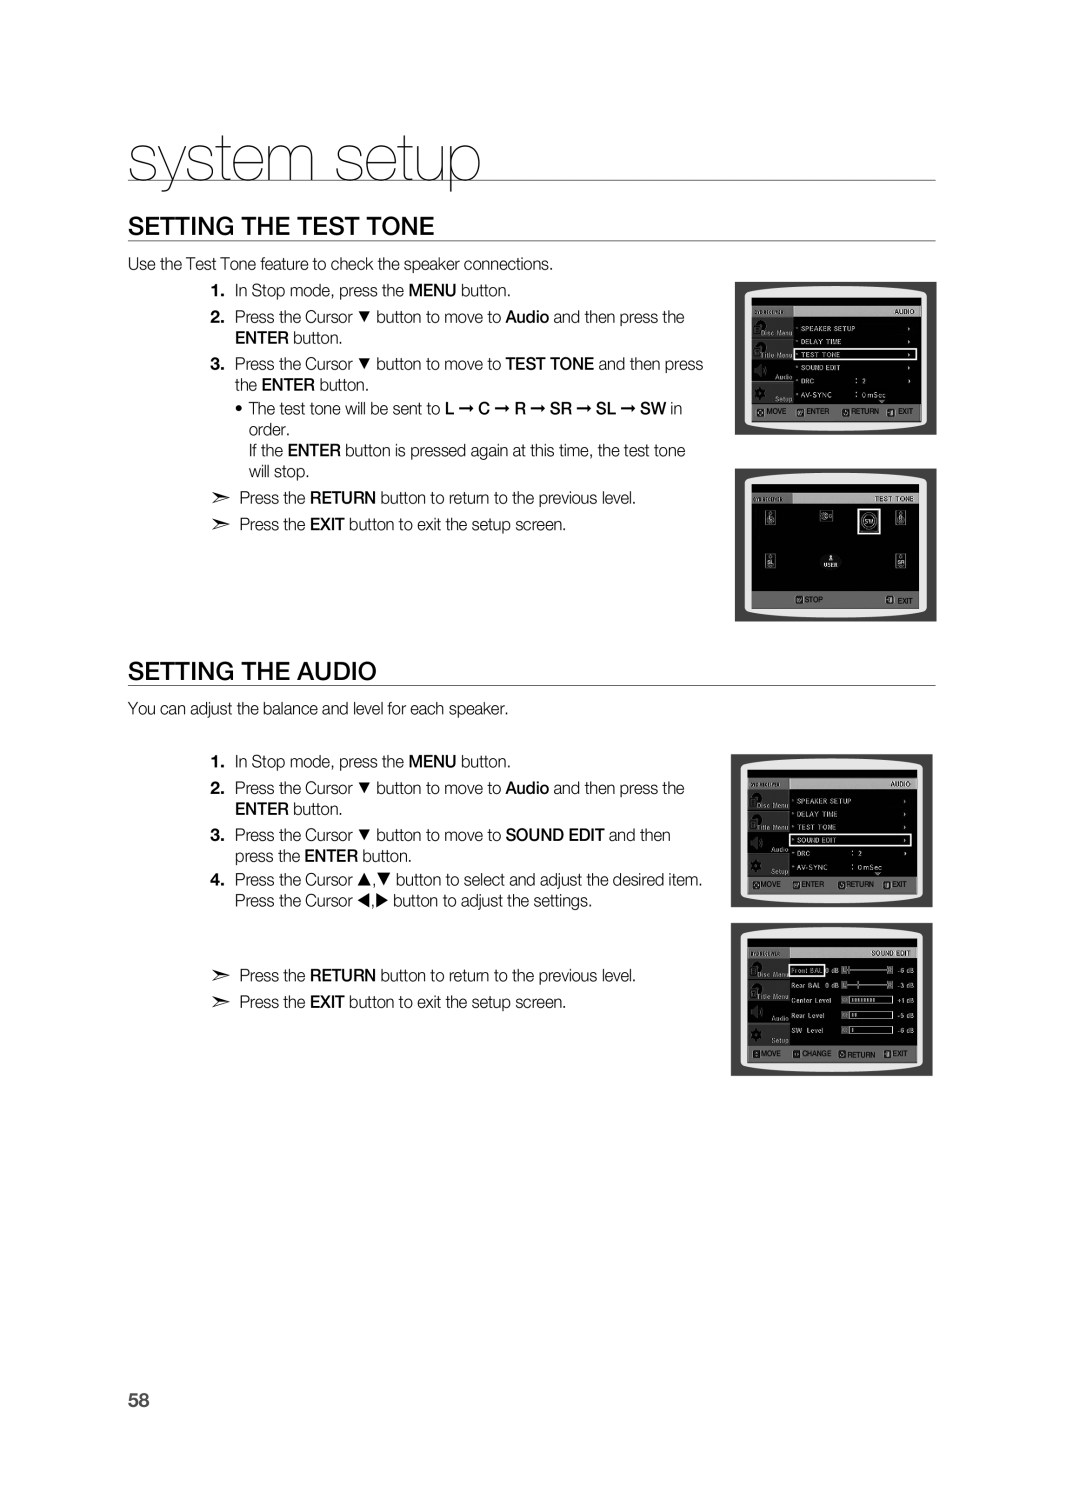 Samsung HT-TZ515 user manual Setting the Test Tone, Setting the Audio, system setup 